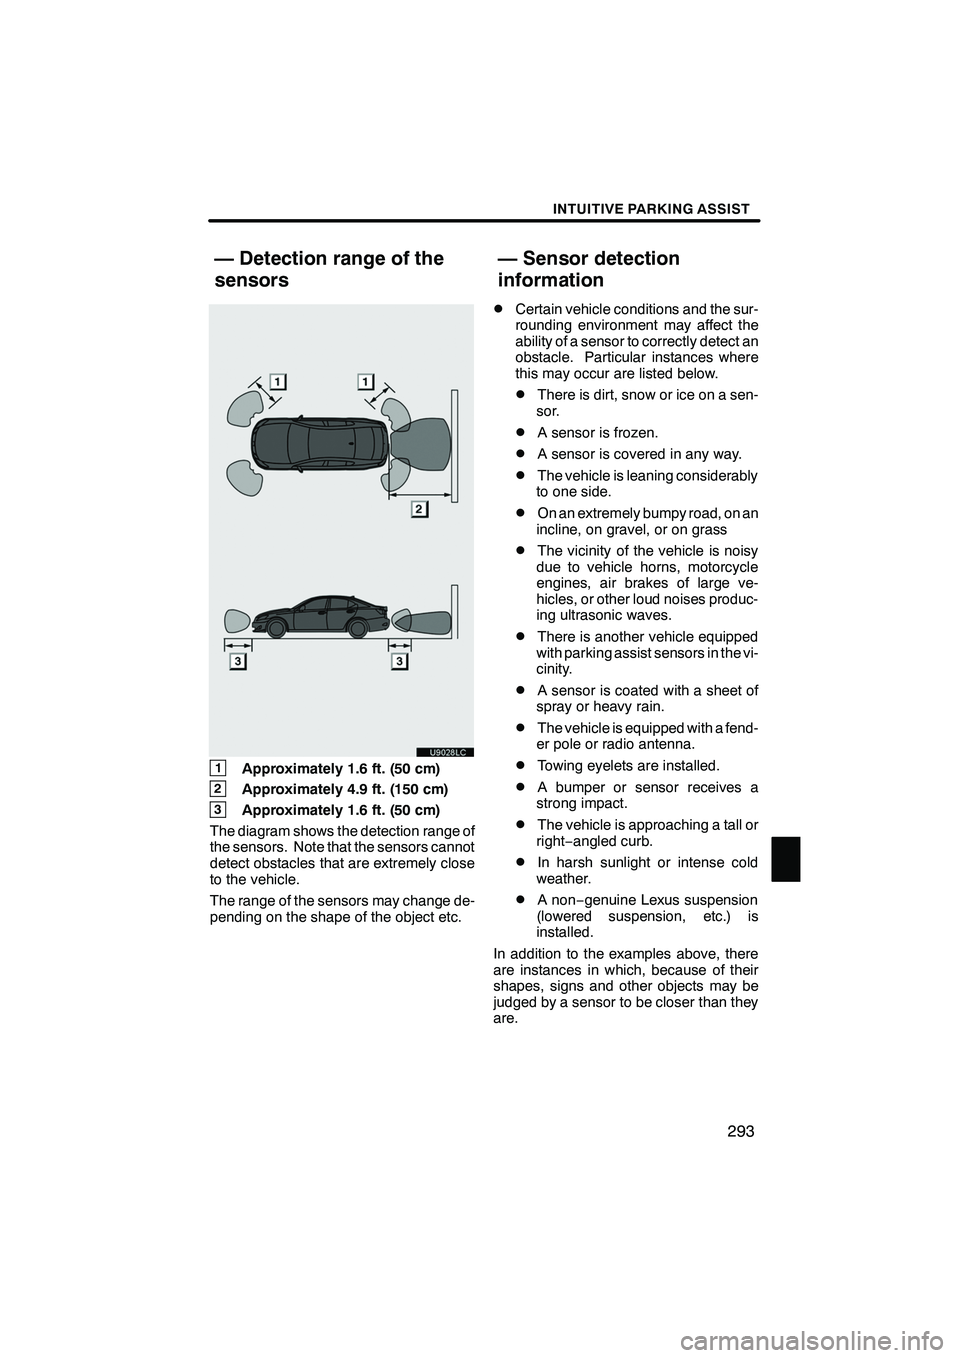 Lexus IS250 2012  Navigation Manual INTUITIVE PARKING ASSIST
293
1Approximately 1.6 ft. (50 cm)
2Approximately 4.9 ft. (150 cm)
3Approximately 1.6 ft. (50 cm)
The diagram shows the detection range of
the sensors. Note that the sensors c